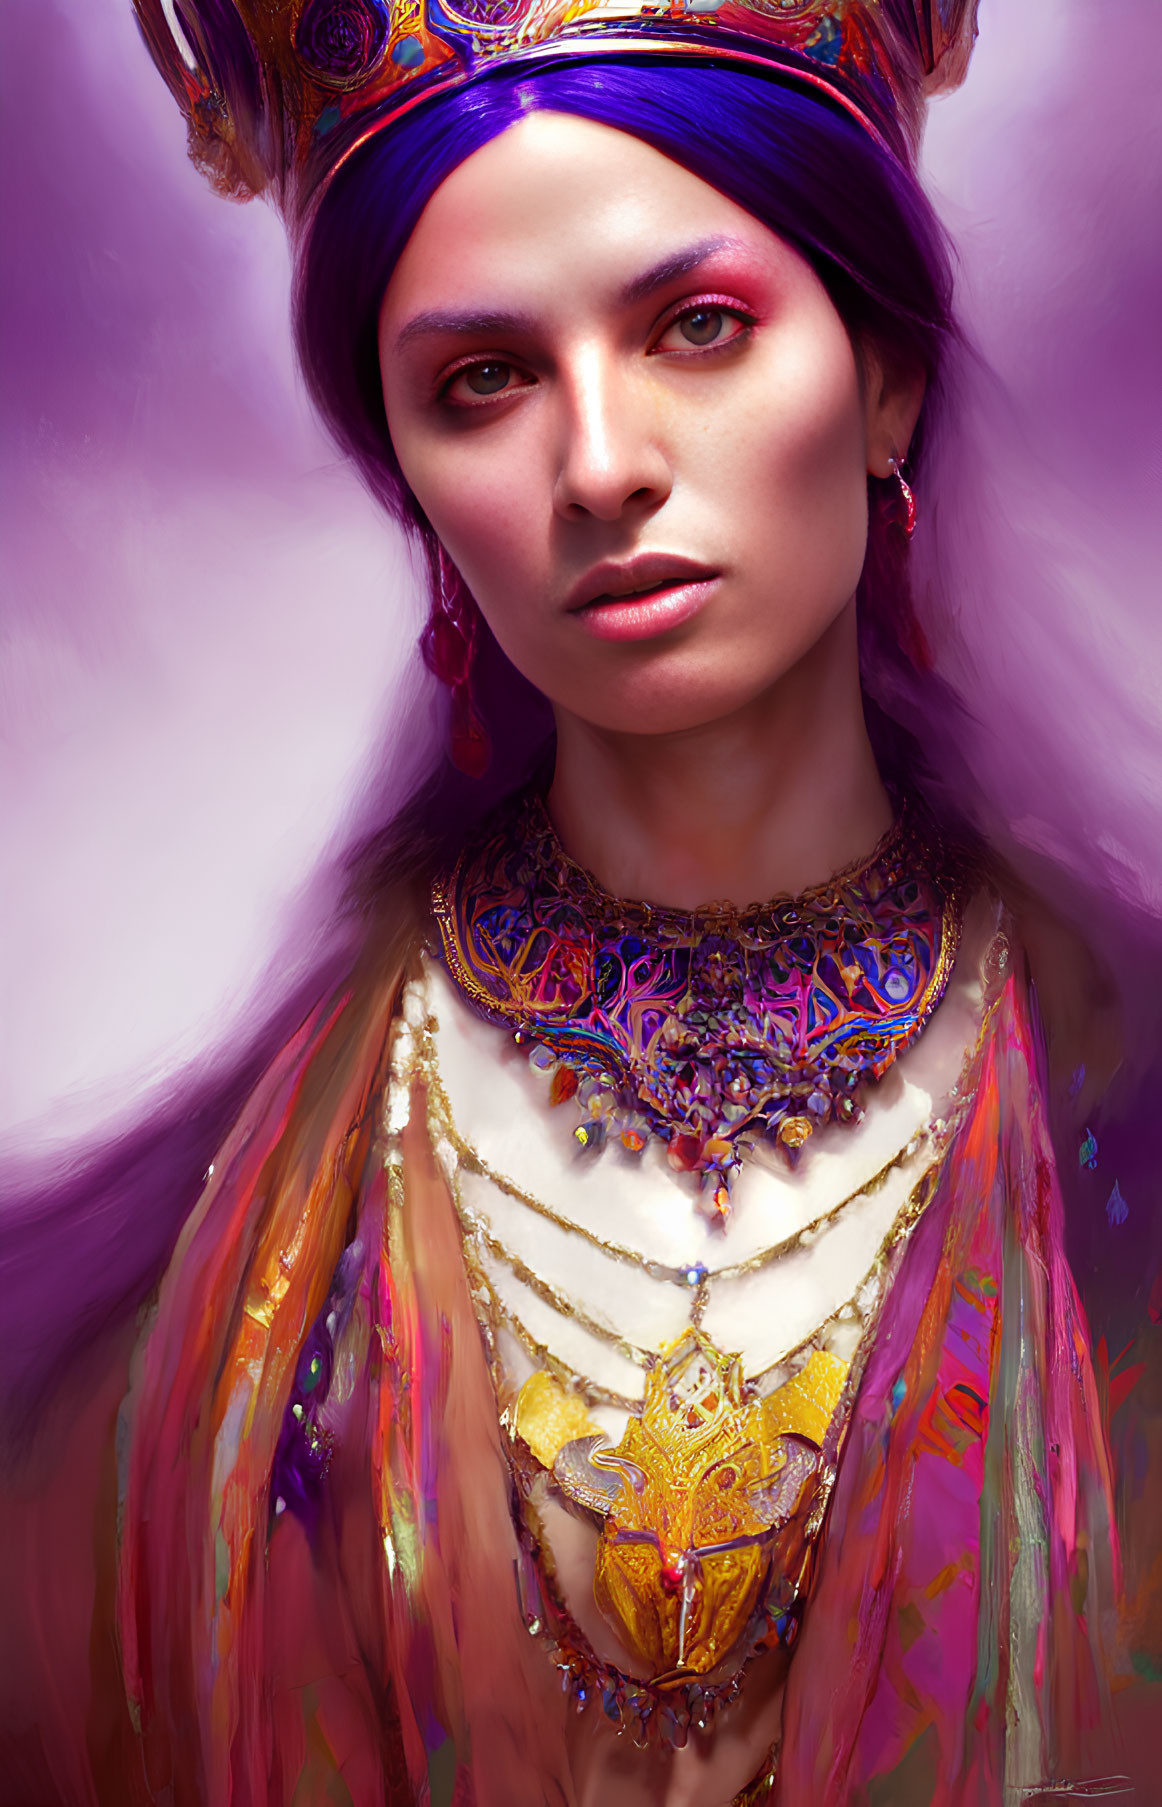 Striking woman in ornate purple and gold regalia on soft purple backdrop